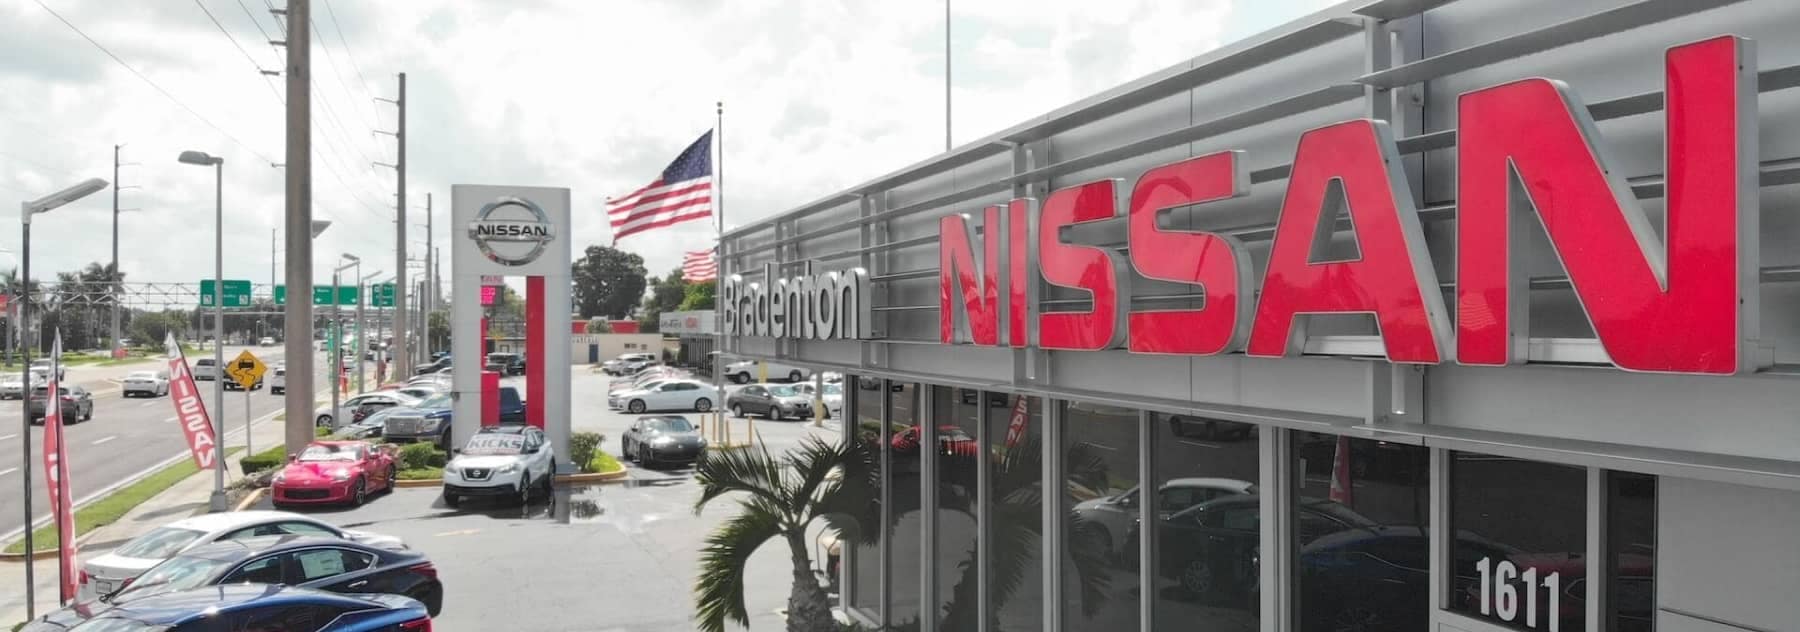 An exterior shot of the Nissan dealership